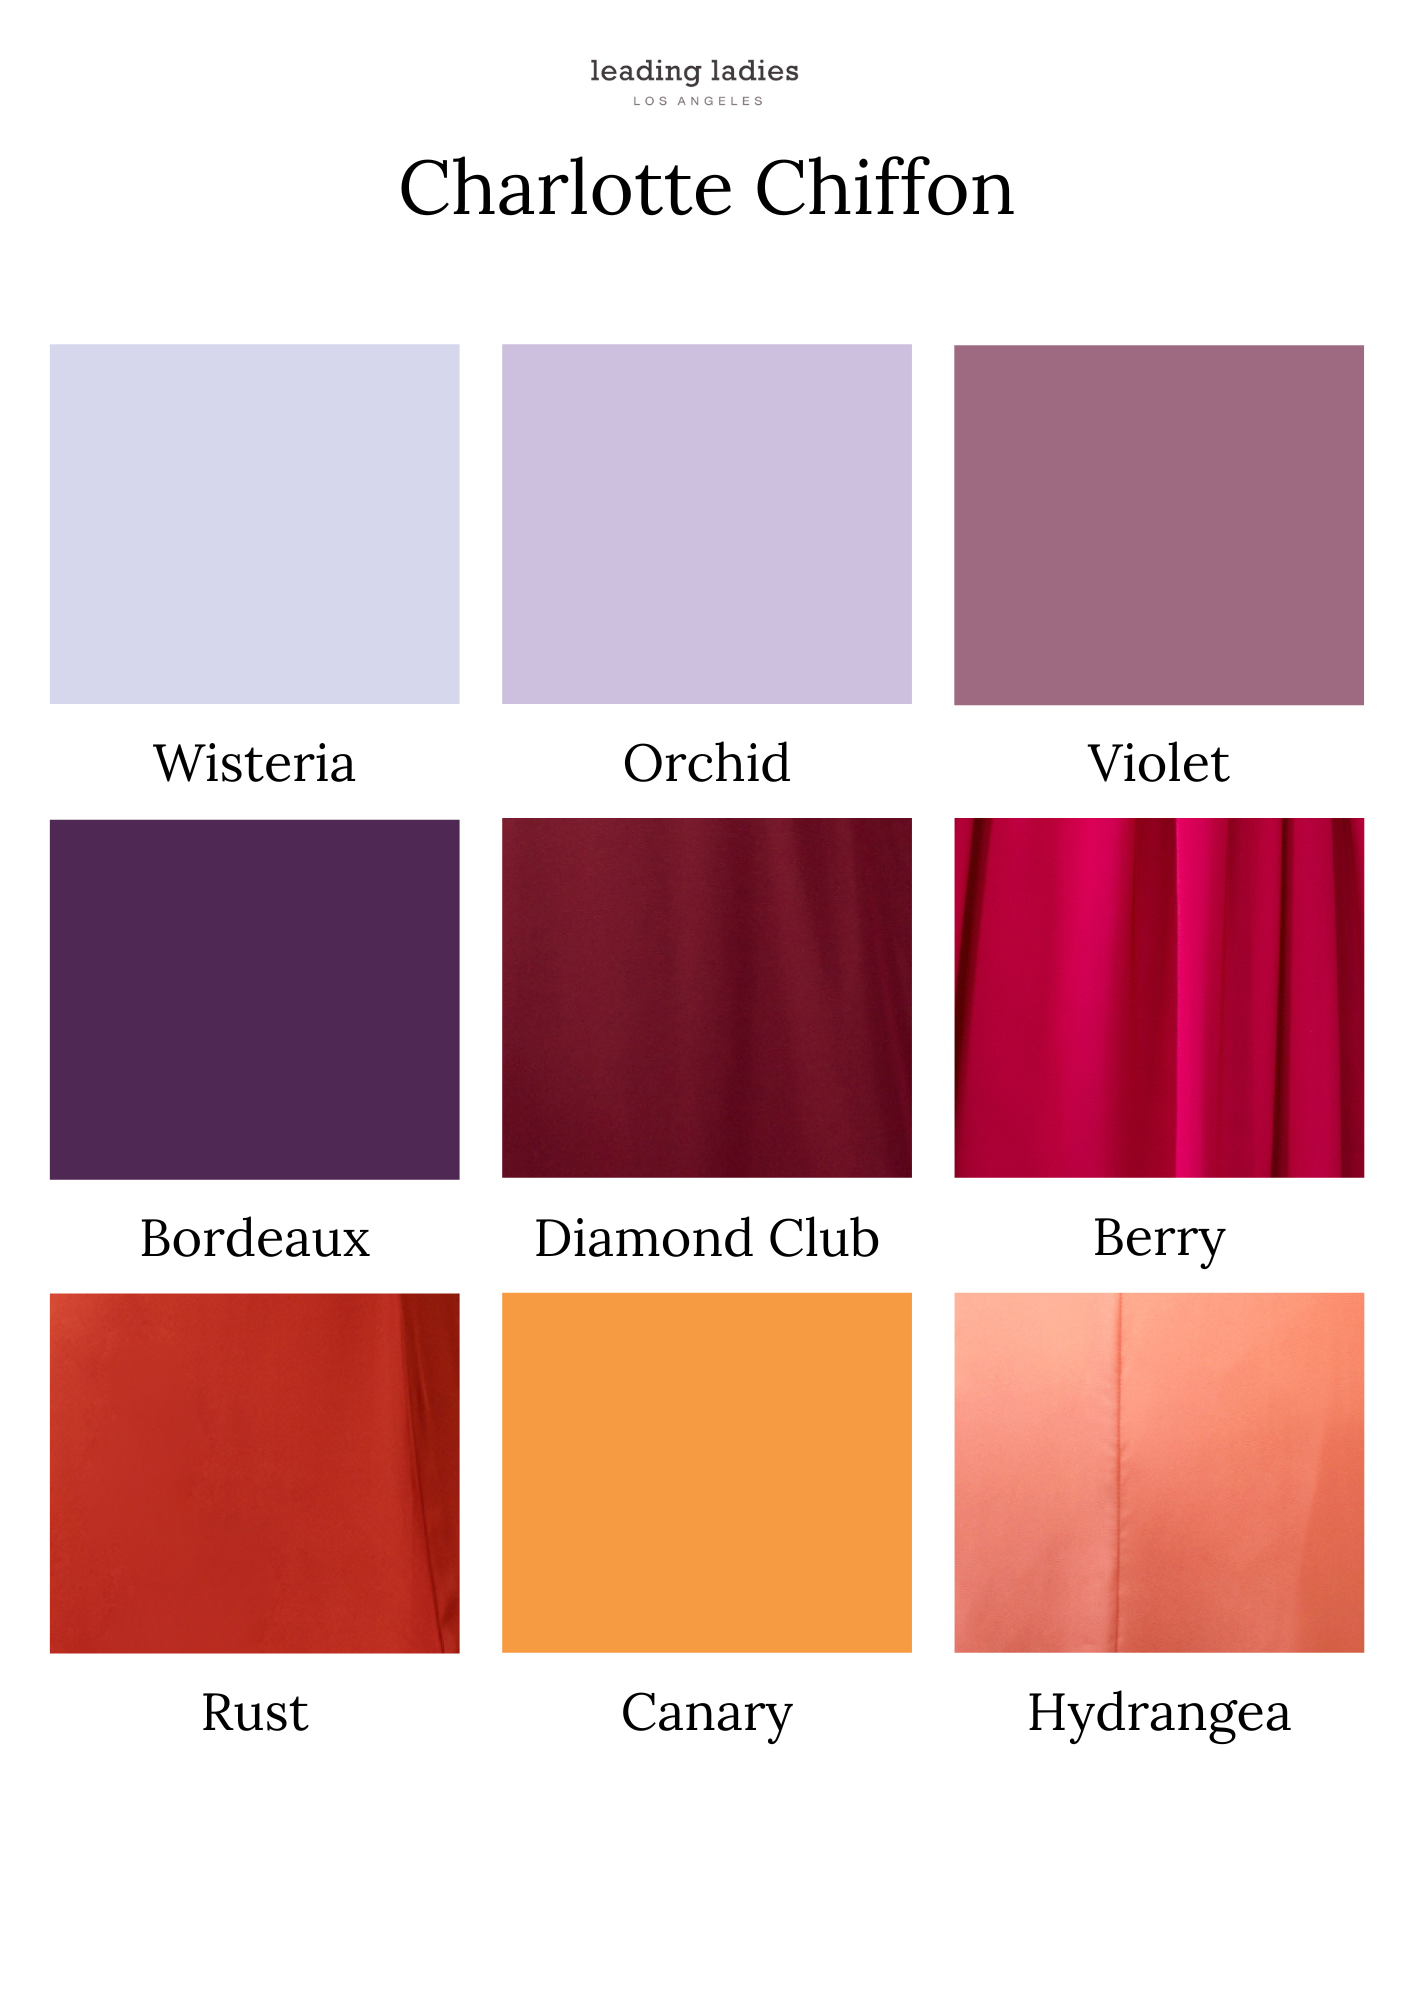 Swatch Page - Chiffon Purples + Reds